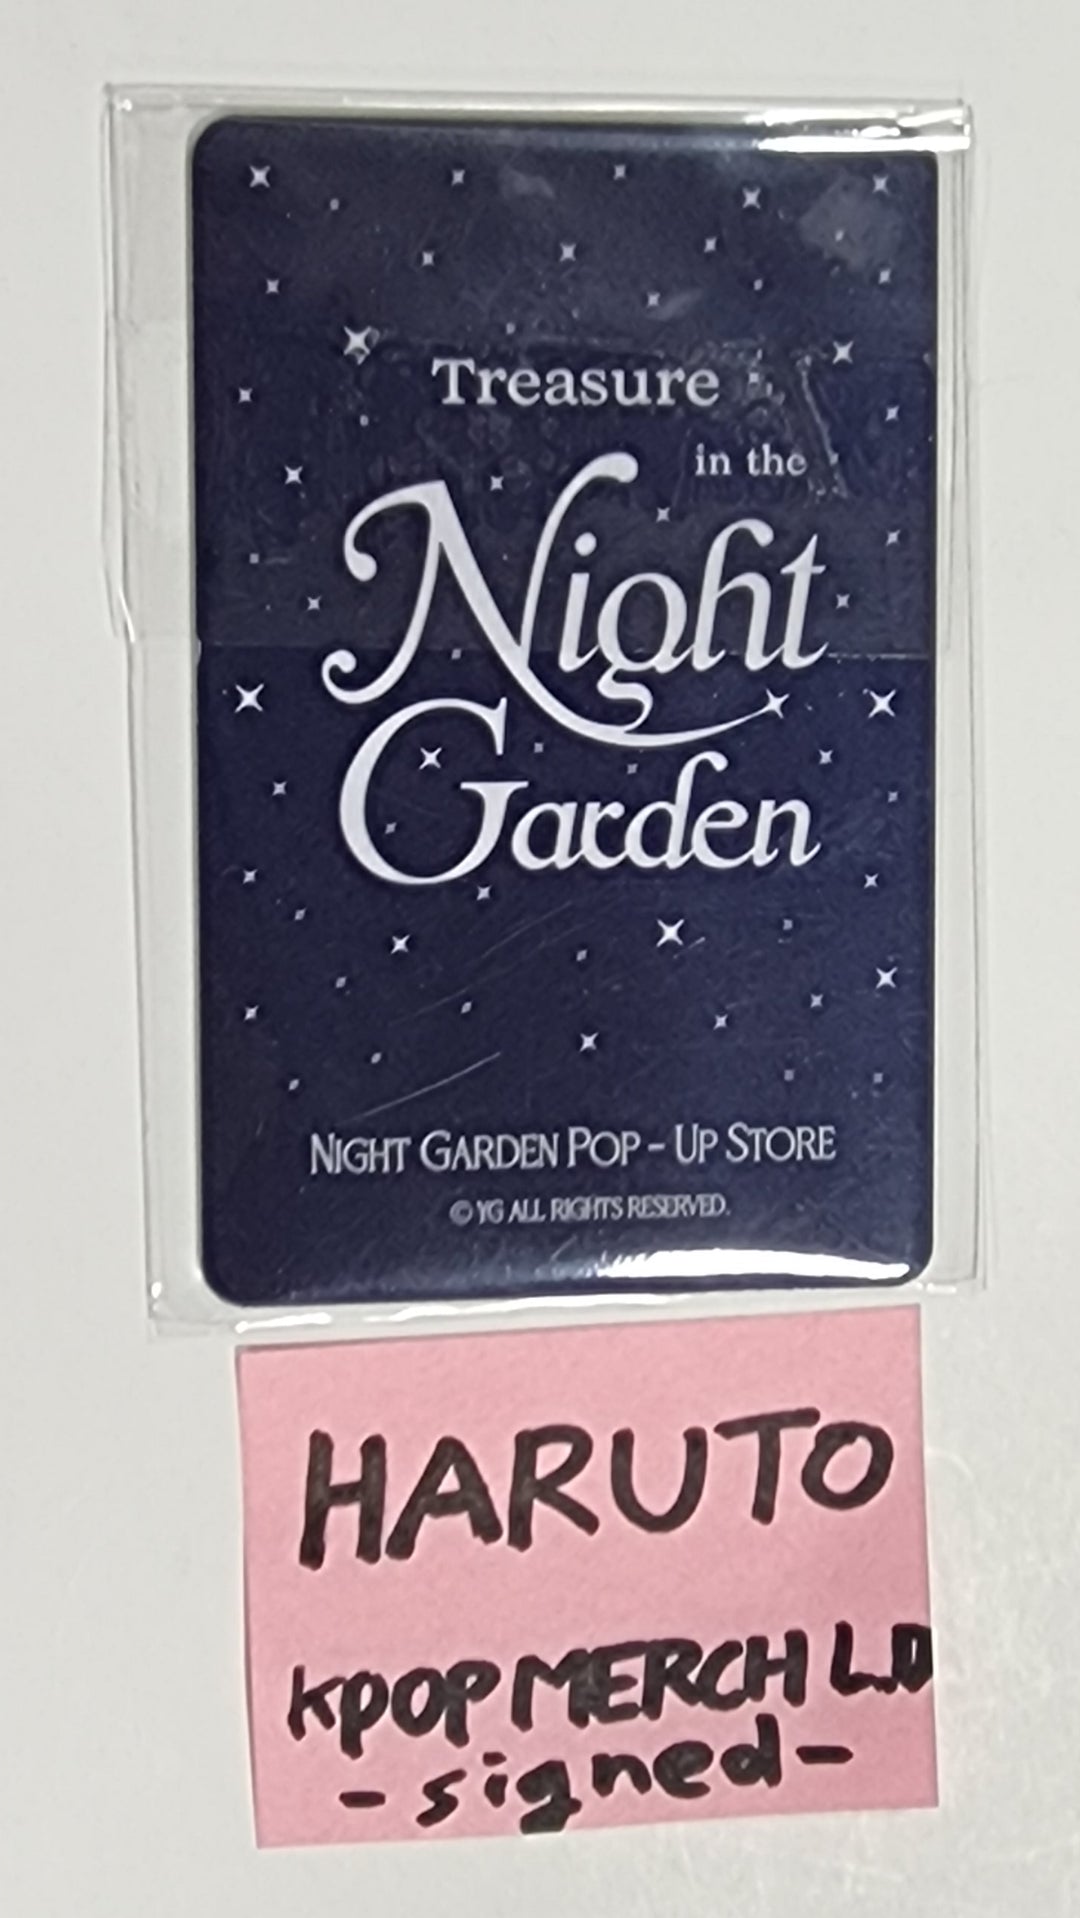 Haruto (Of Treasure) "Night Garden" - 친필 사인(서명) Lucky Draw PVC 포토카드